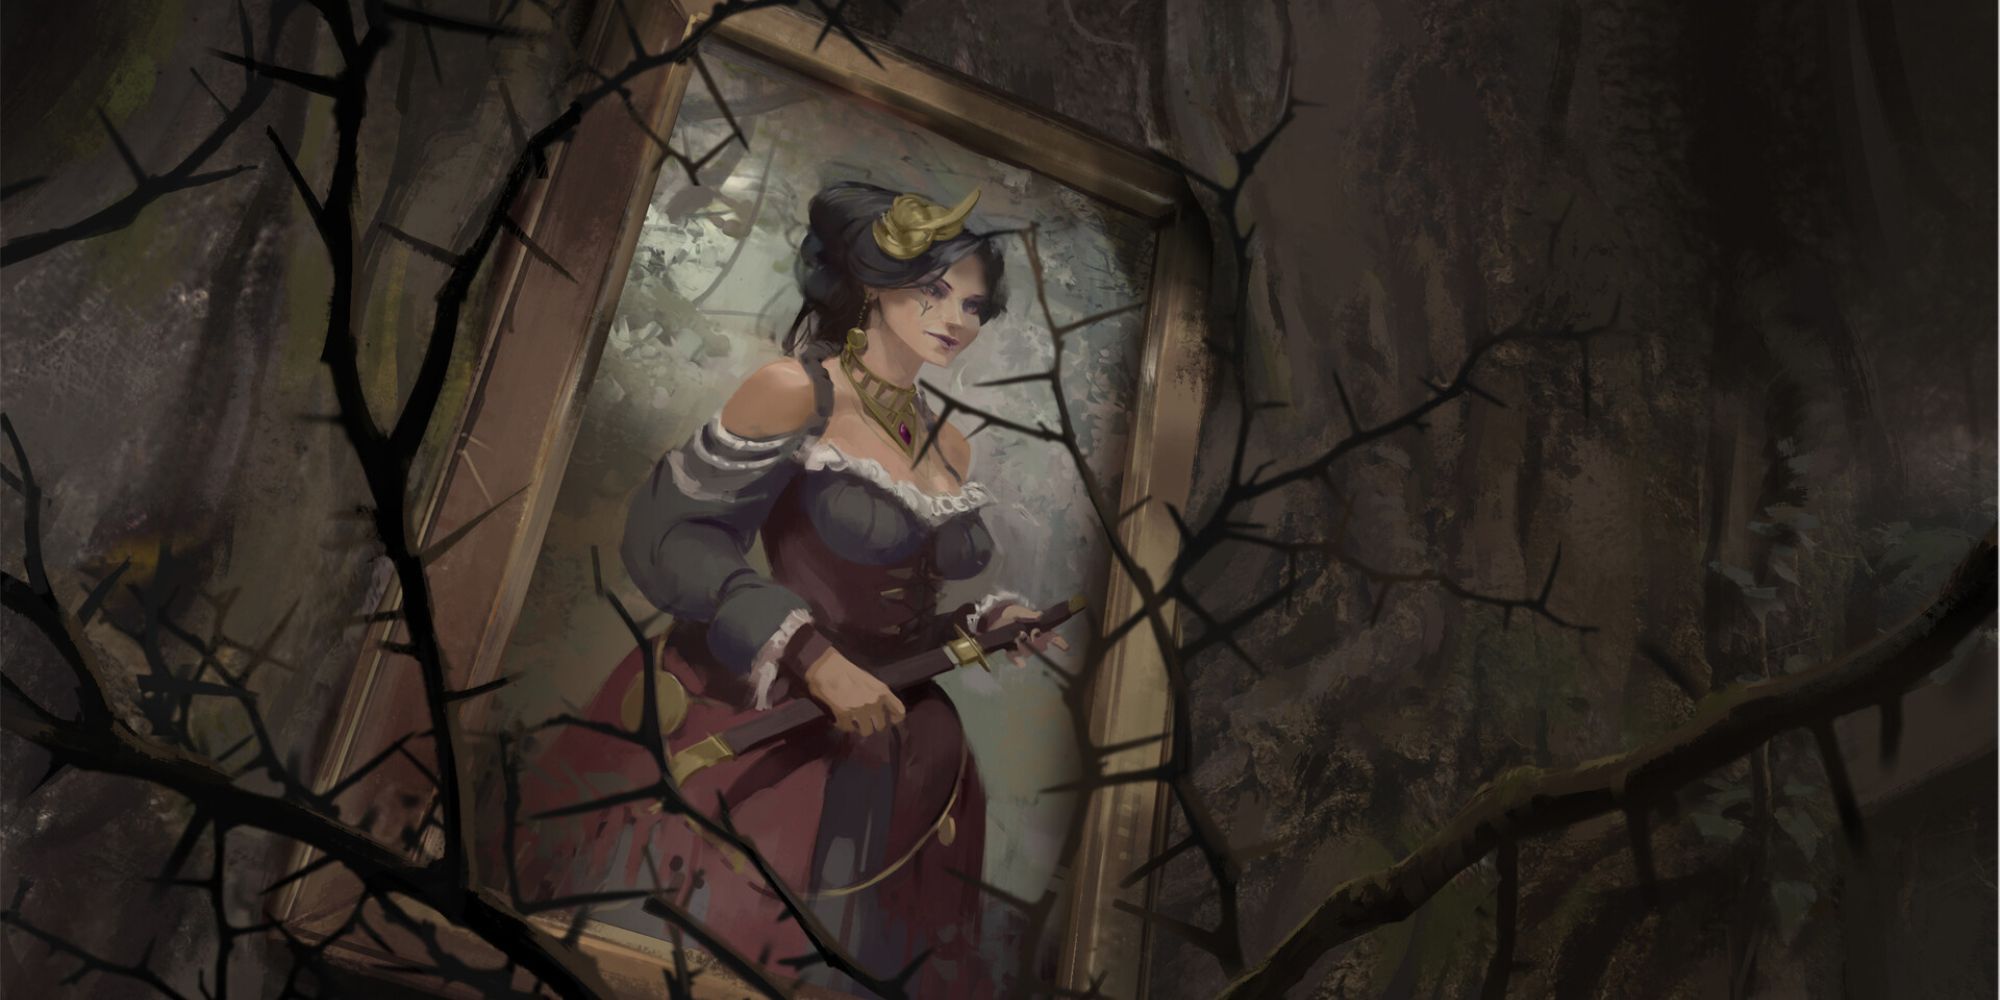 Magical Portrait of Tasha In A Room Full Of Dead Trees